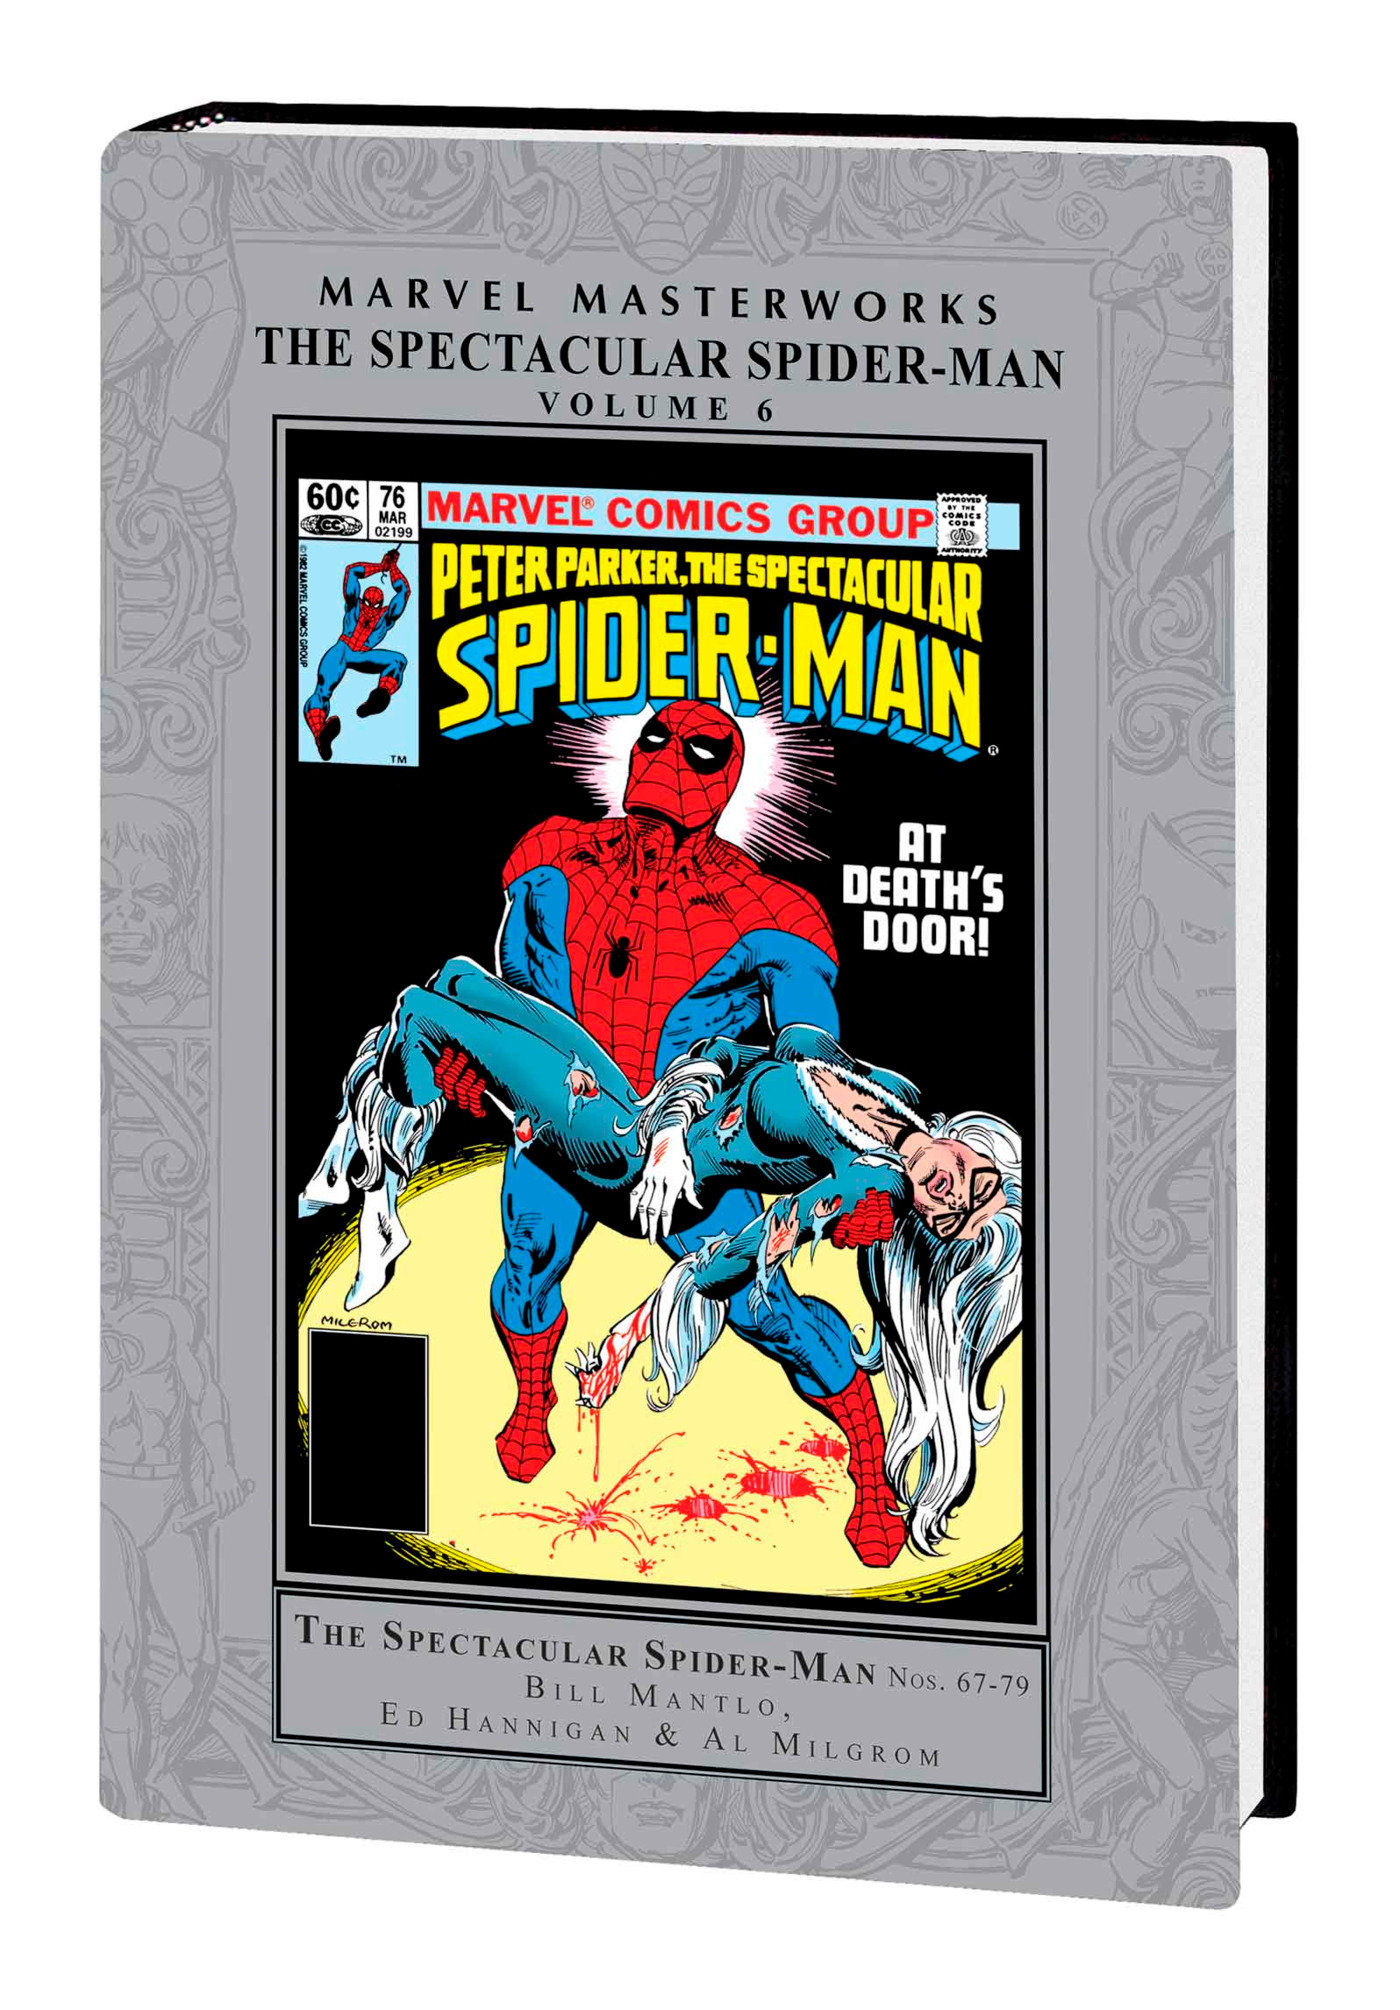 Marvel Masterworks Spectacular Spider-Man Hardcover Volume 6